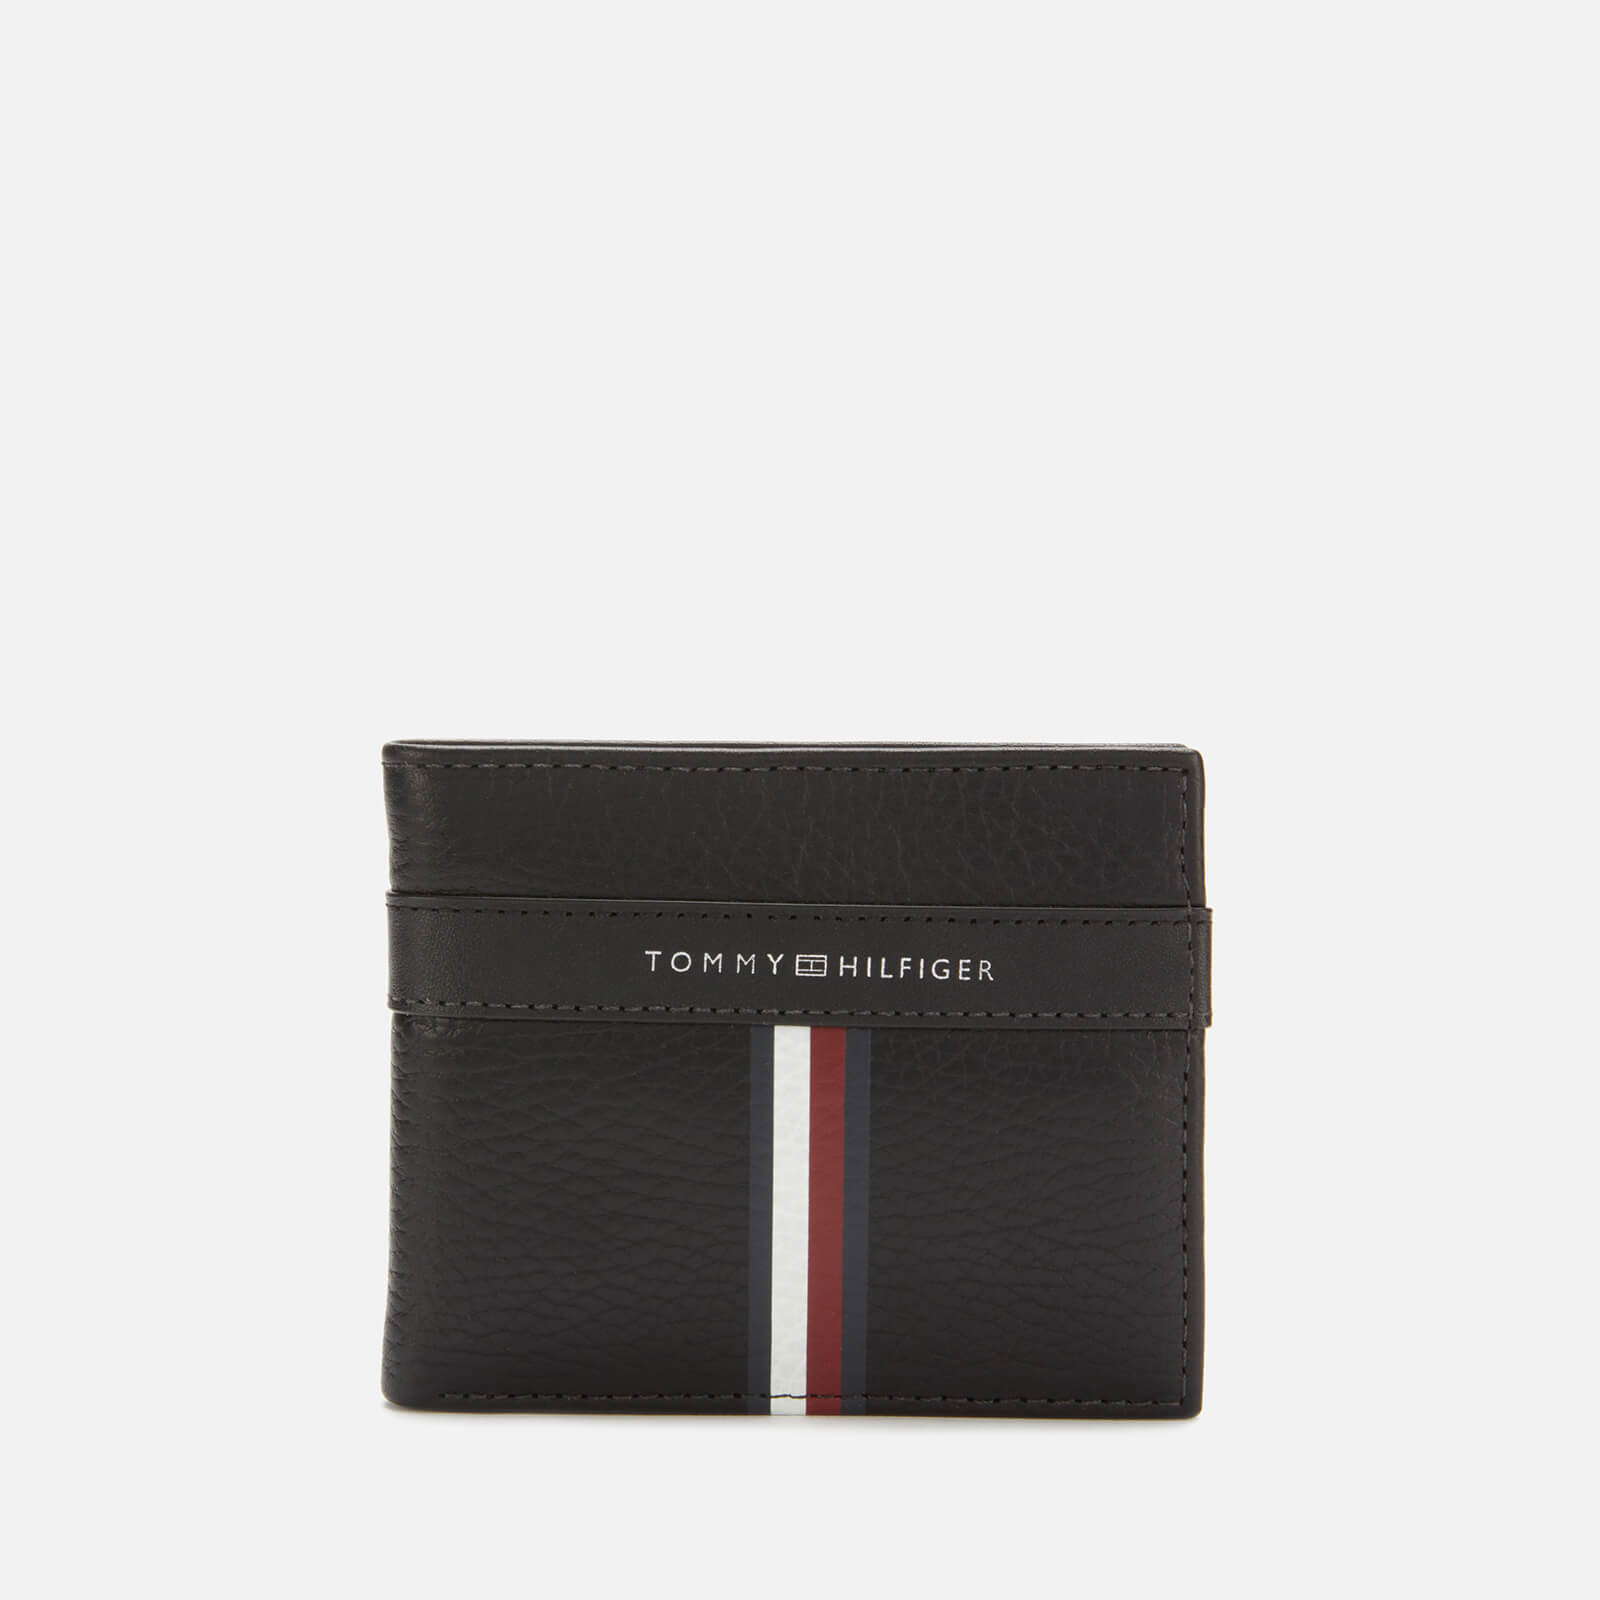 tommy hilfiger mini wallet